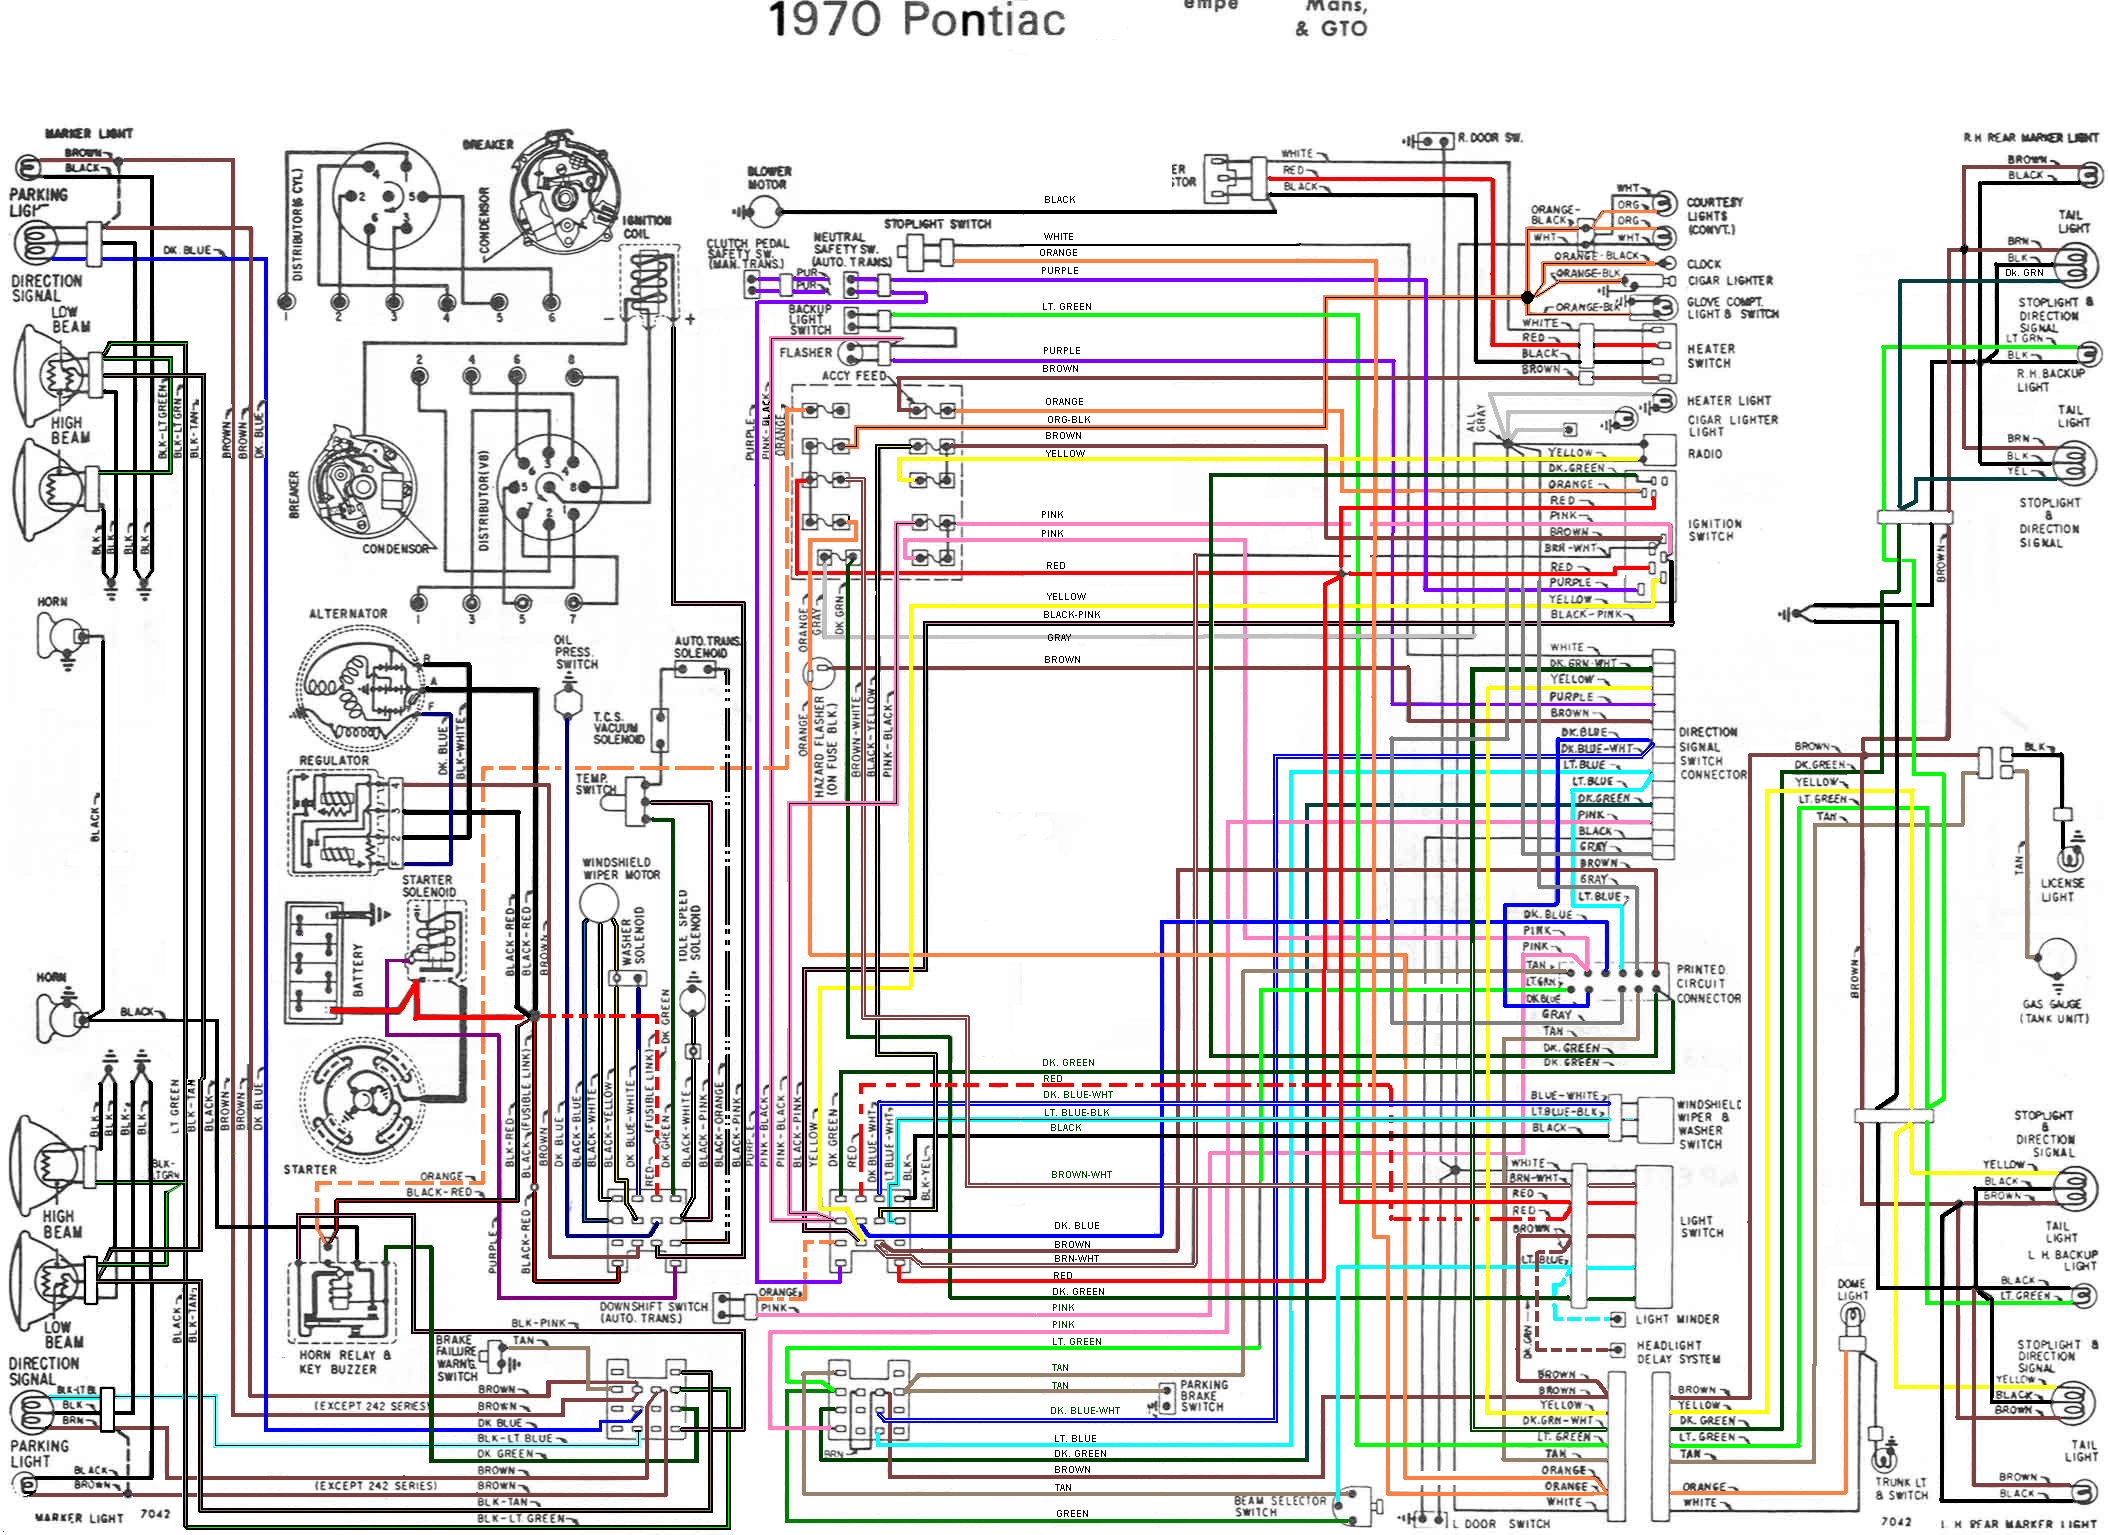 71 chevelle wiring diagram free download schematic wiring diagram1971 chevelle wiring diagrams free wiring diagrams favorites